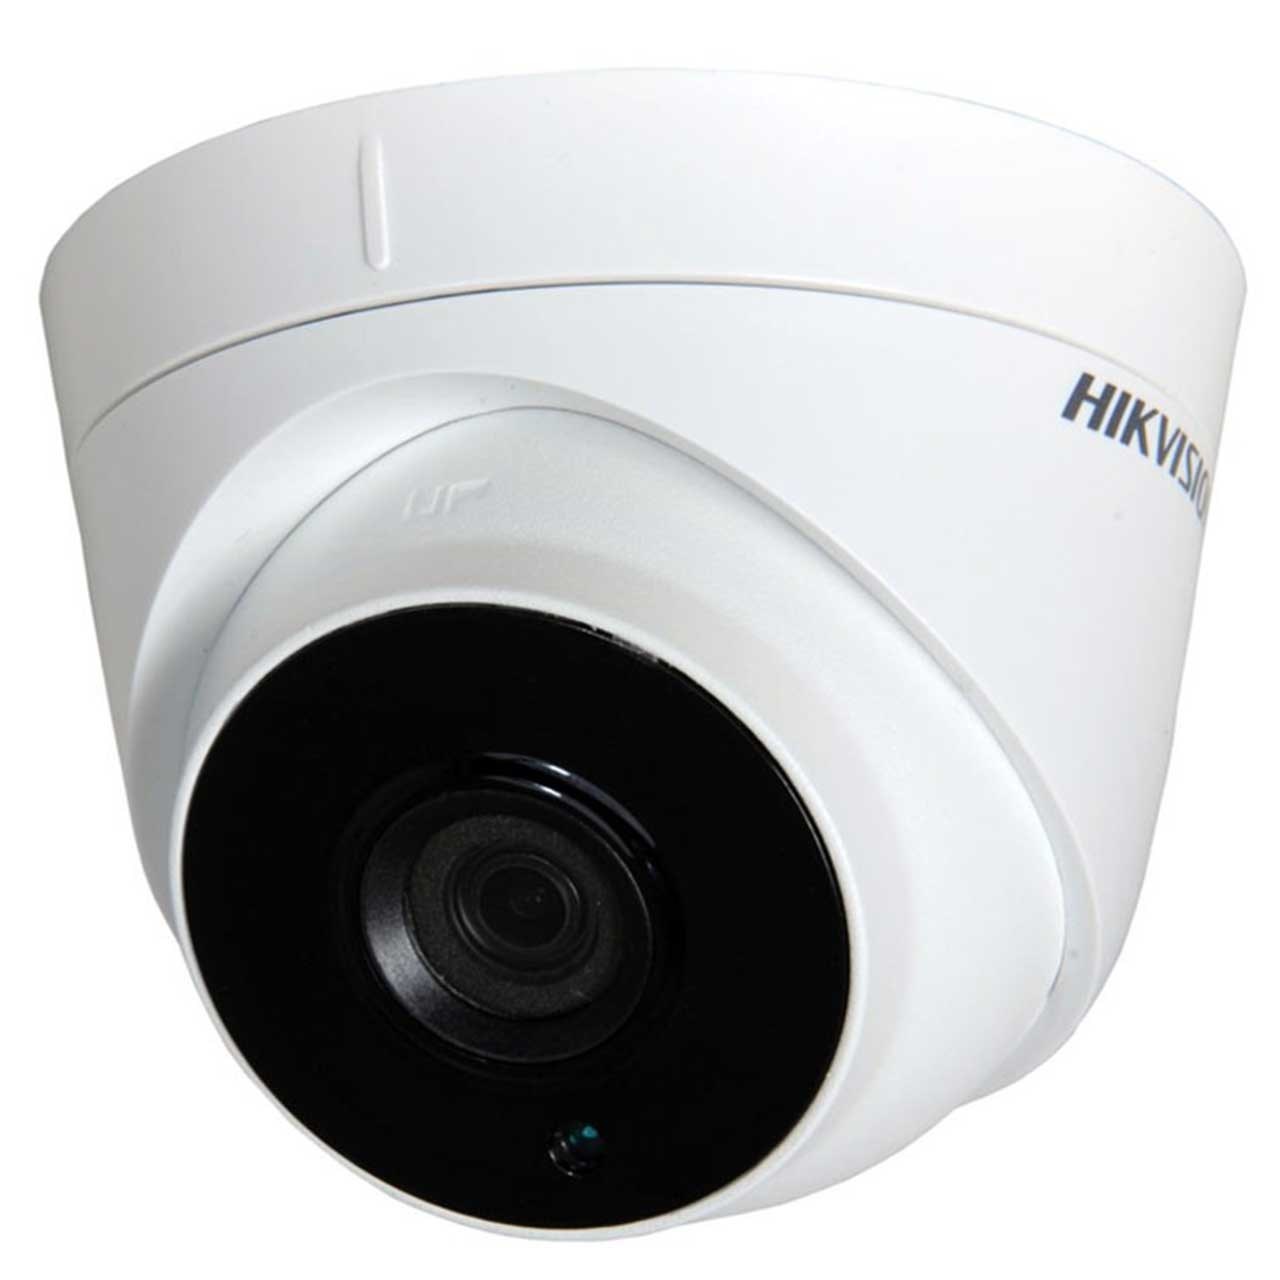 دوربین تحت شبکه هایک ویژن مدل DS-2CE56D0T-IT3